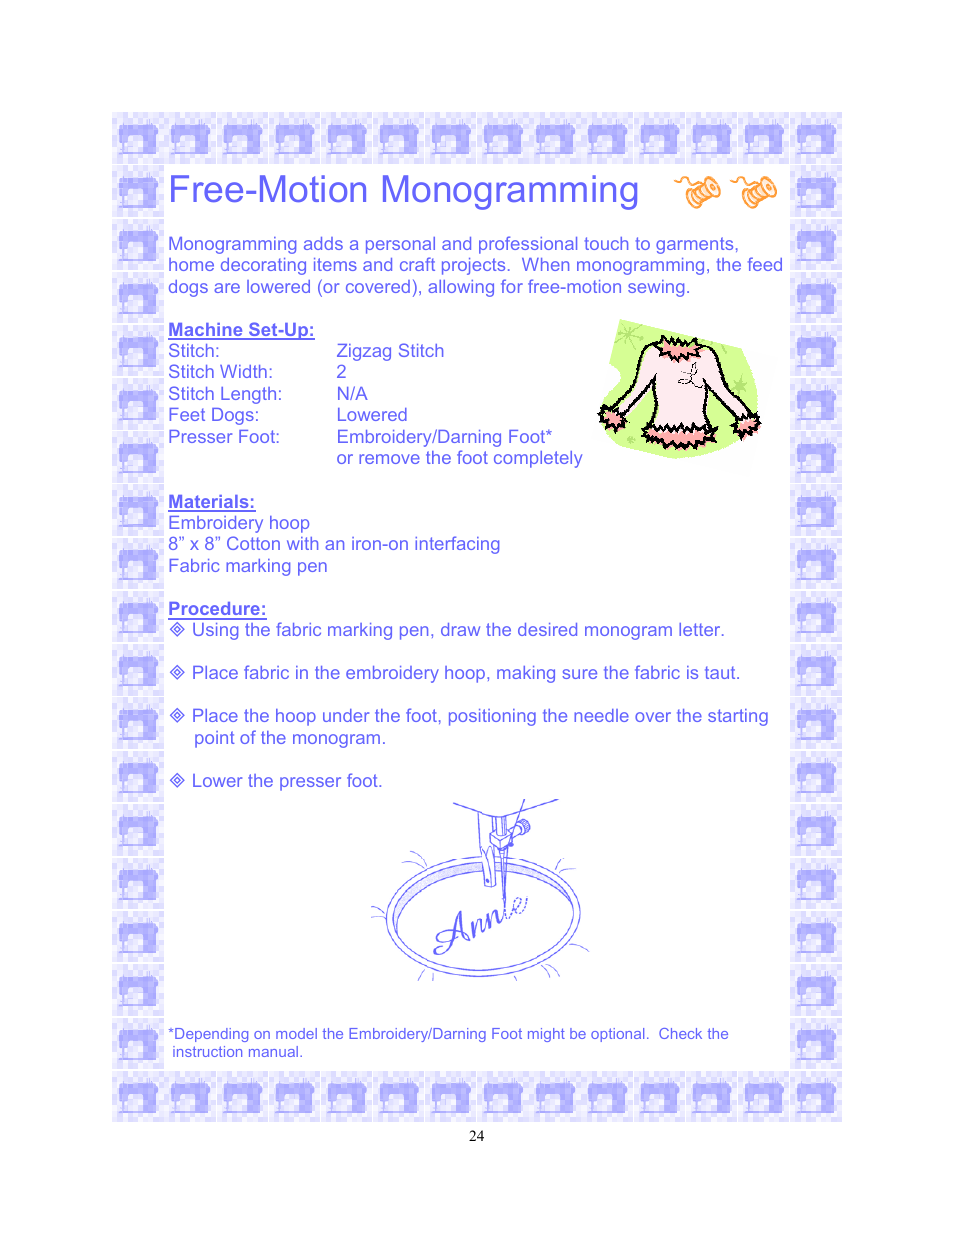 Free-motion monogramming | SINGER 6550-WORKBOOK Scholastic User Manual | Page 28 / 59